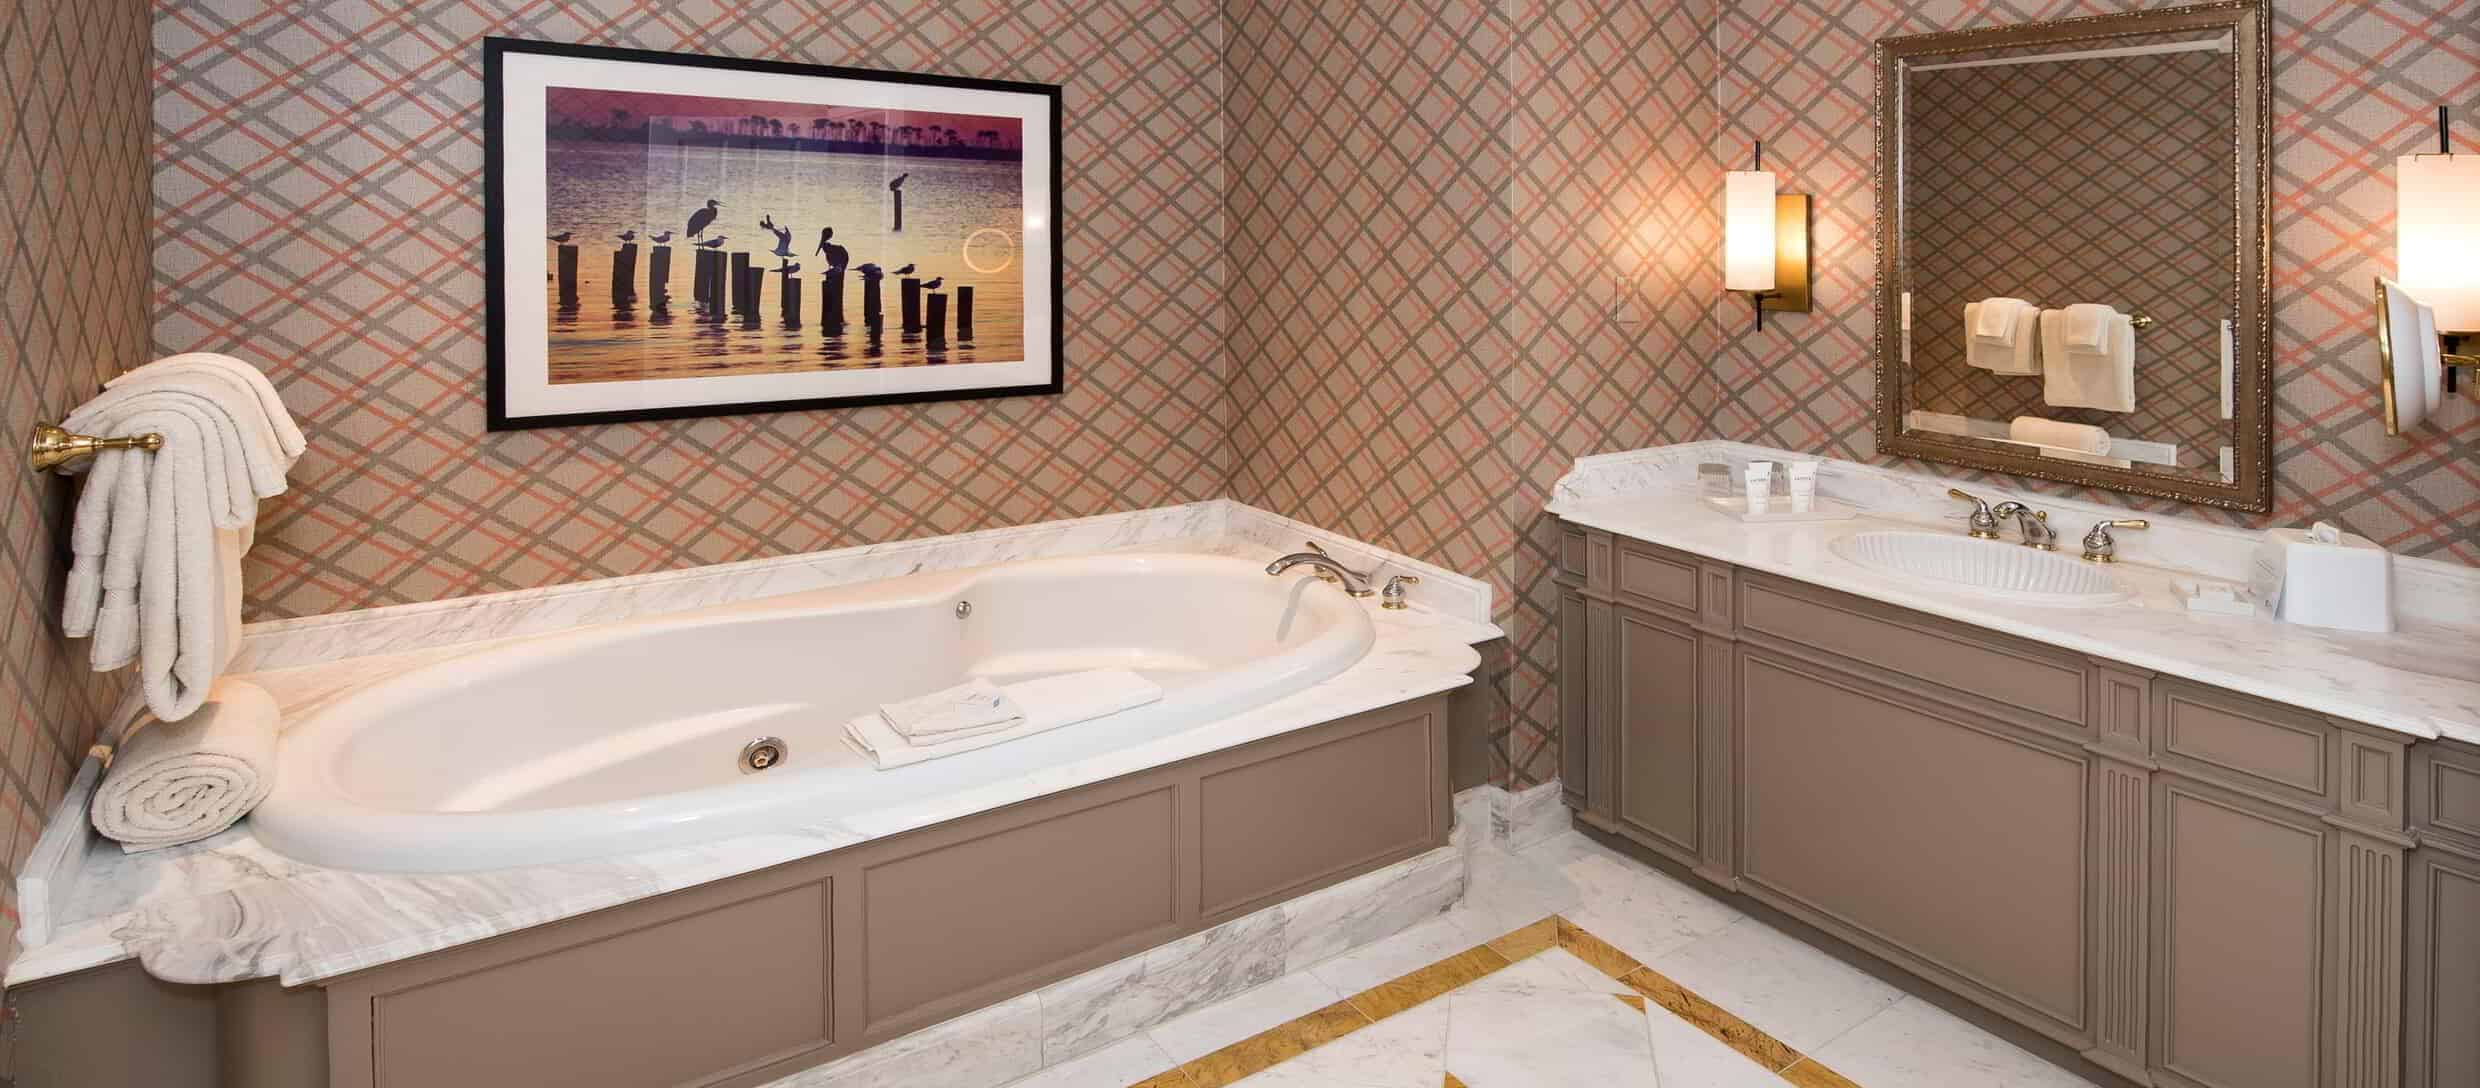 beau-rivage-hotel-cypress-suite-bathroom-hot-tub.jpg.image.2480.1088.high